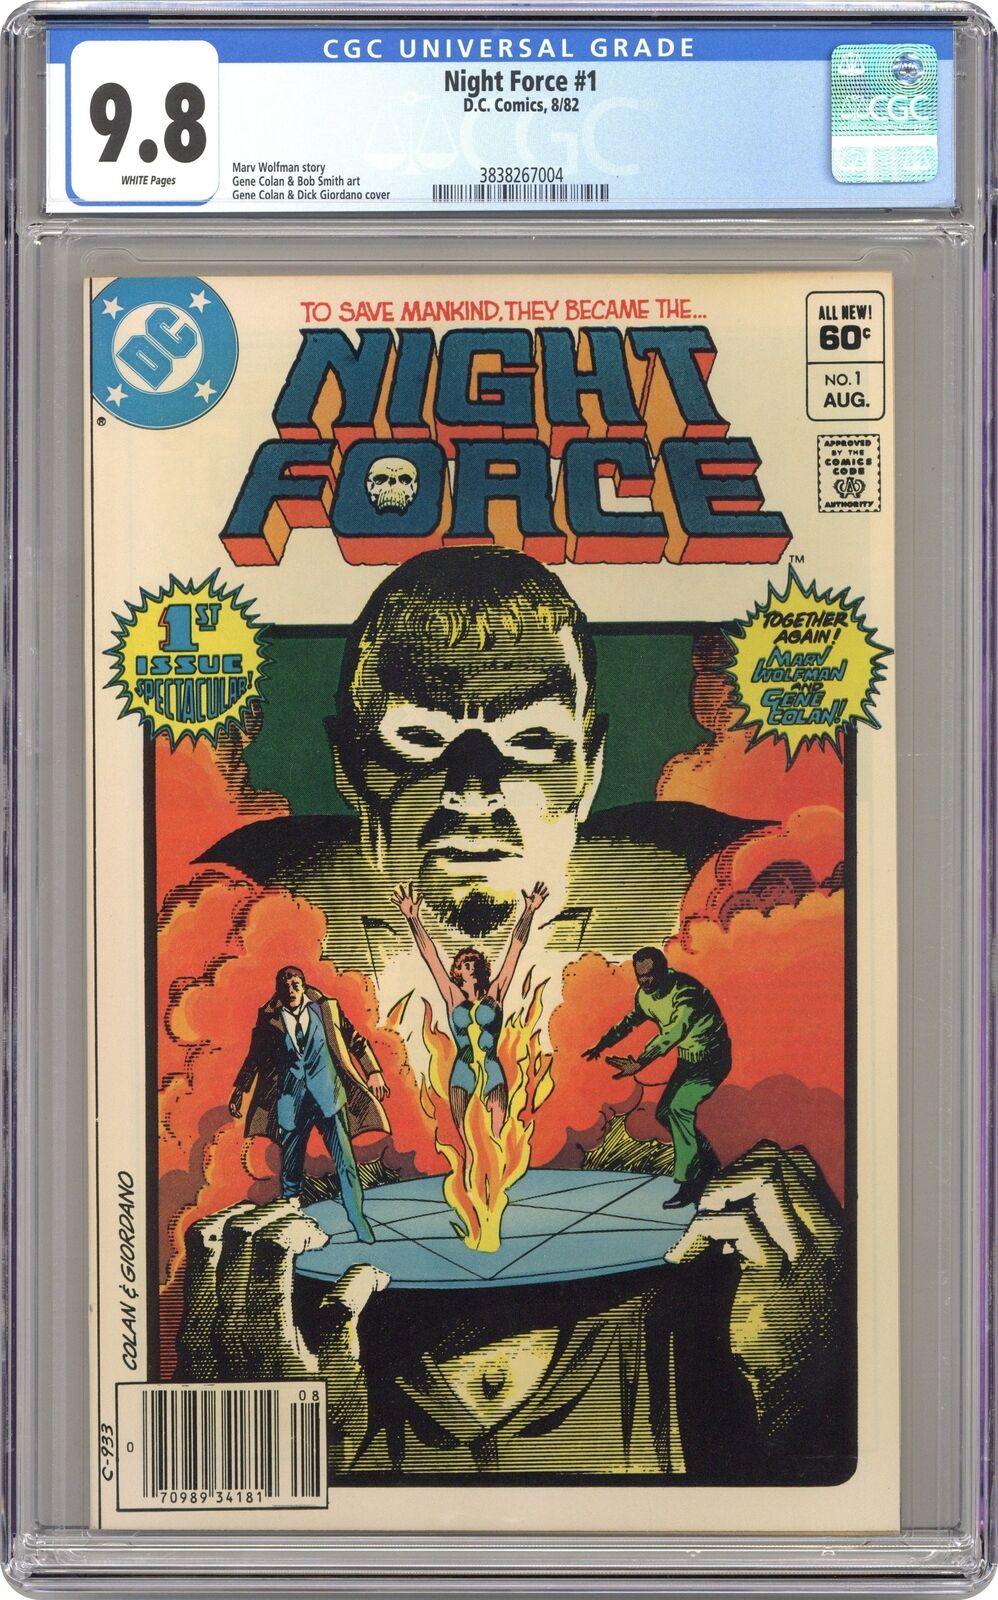 Night Force #1 CGC 9.8 1982 3838267004